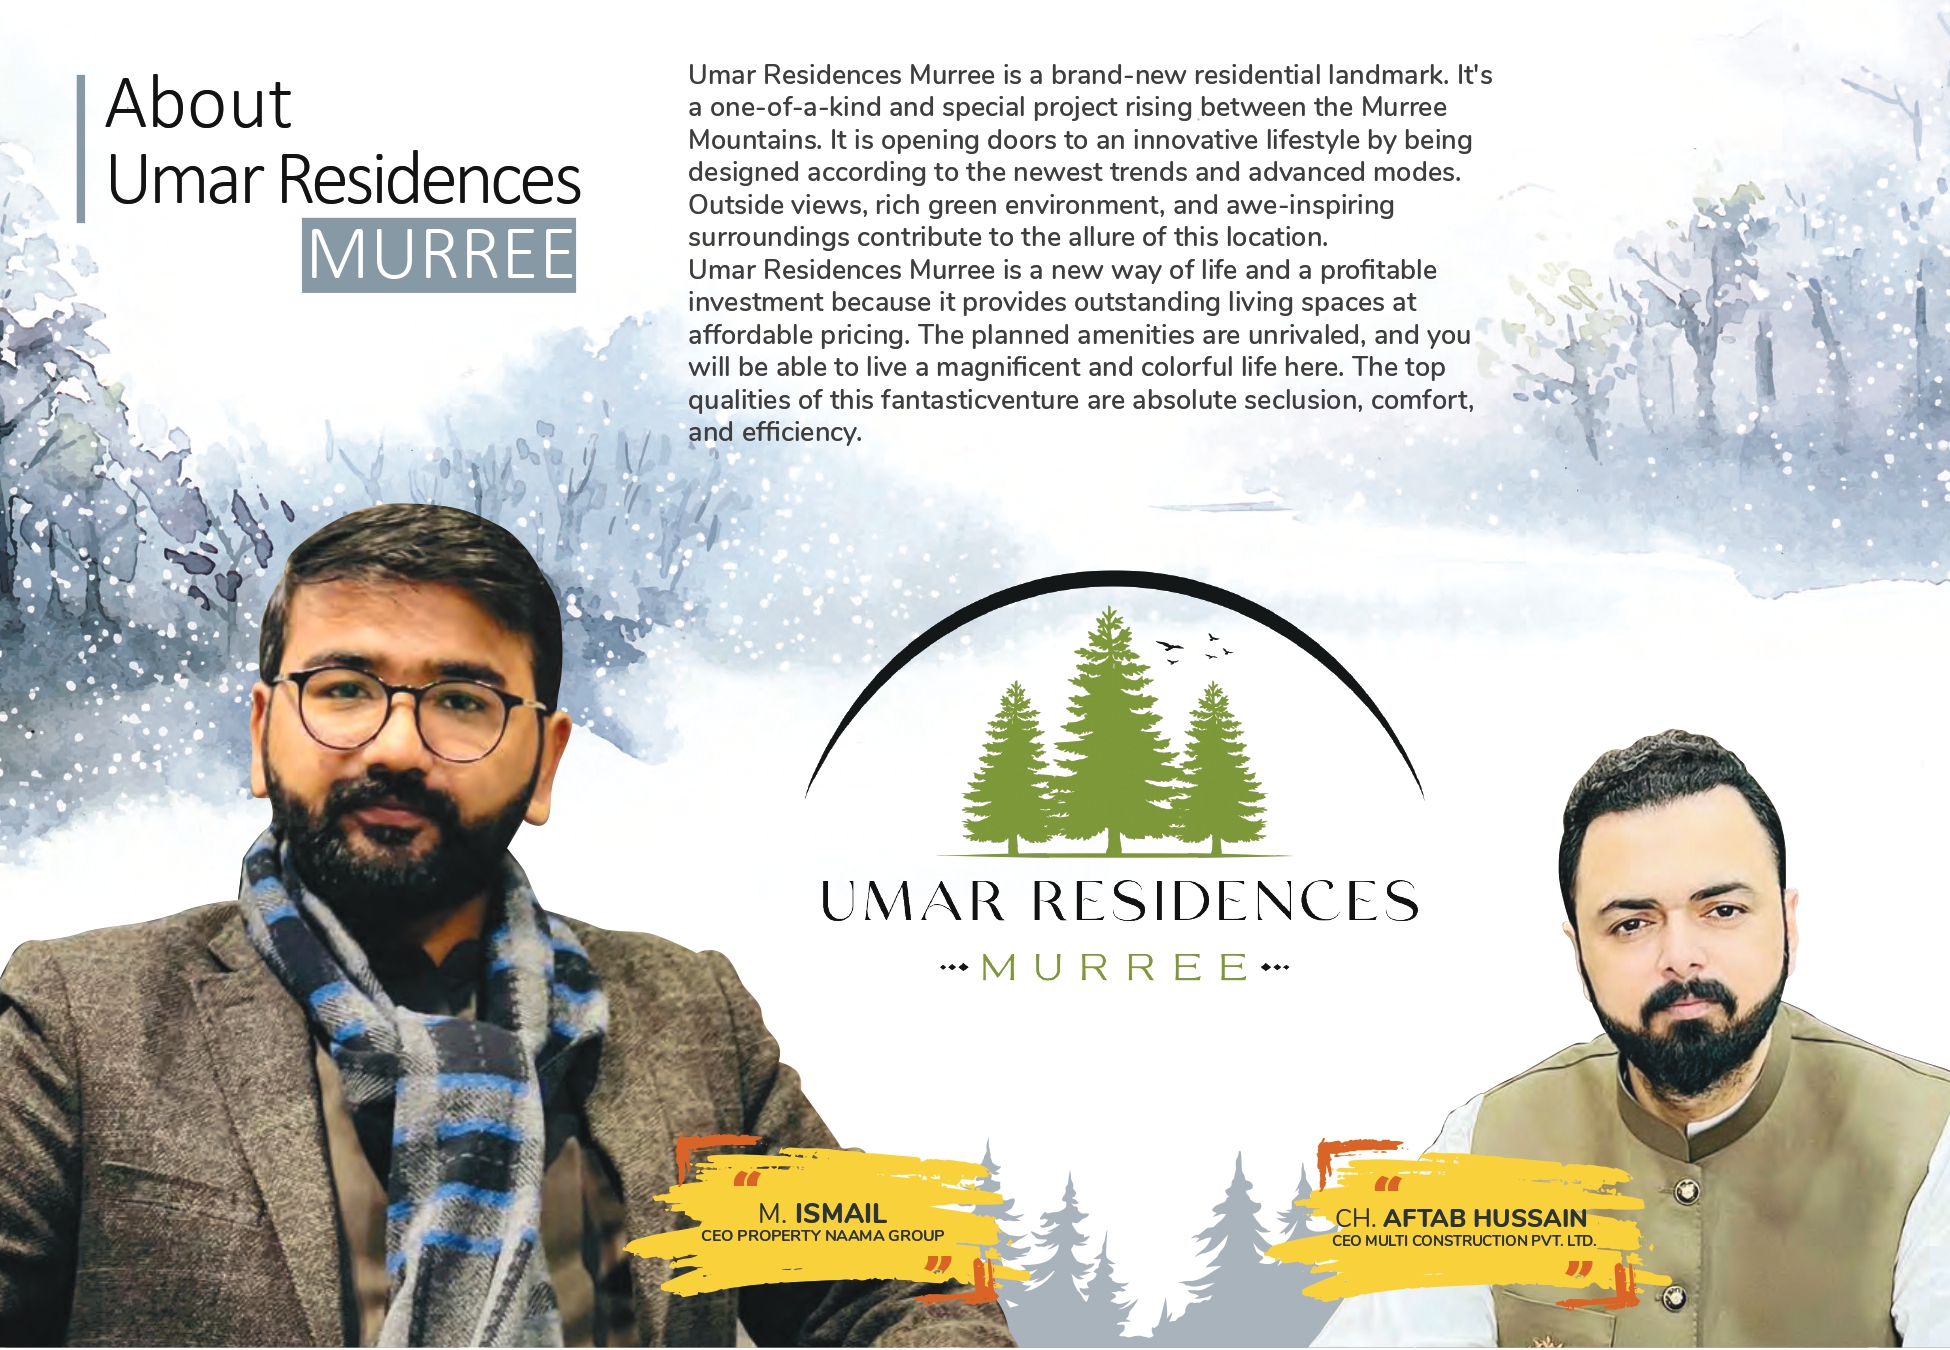 Umar Residences Murree